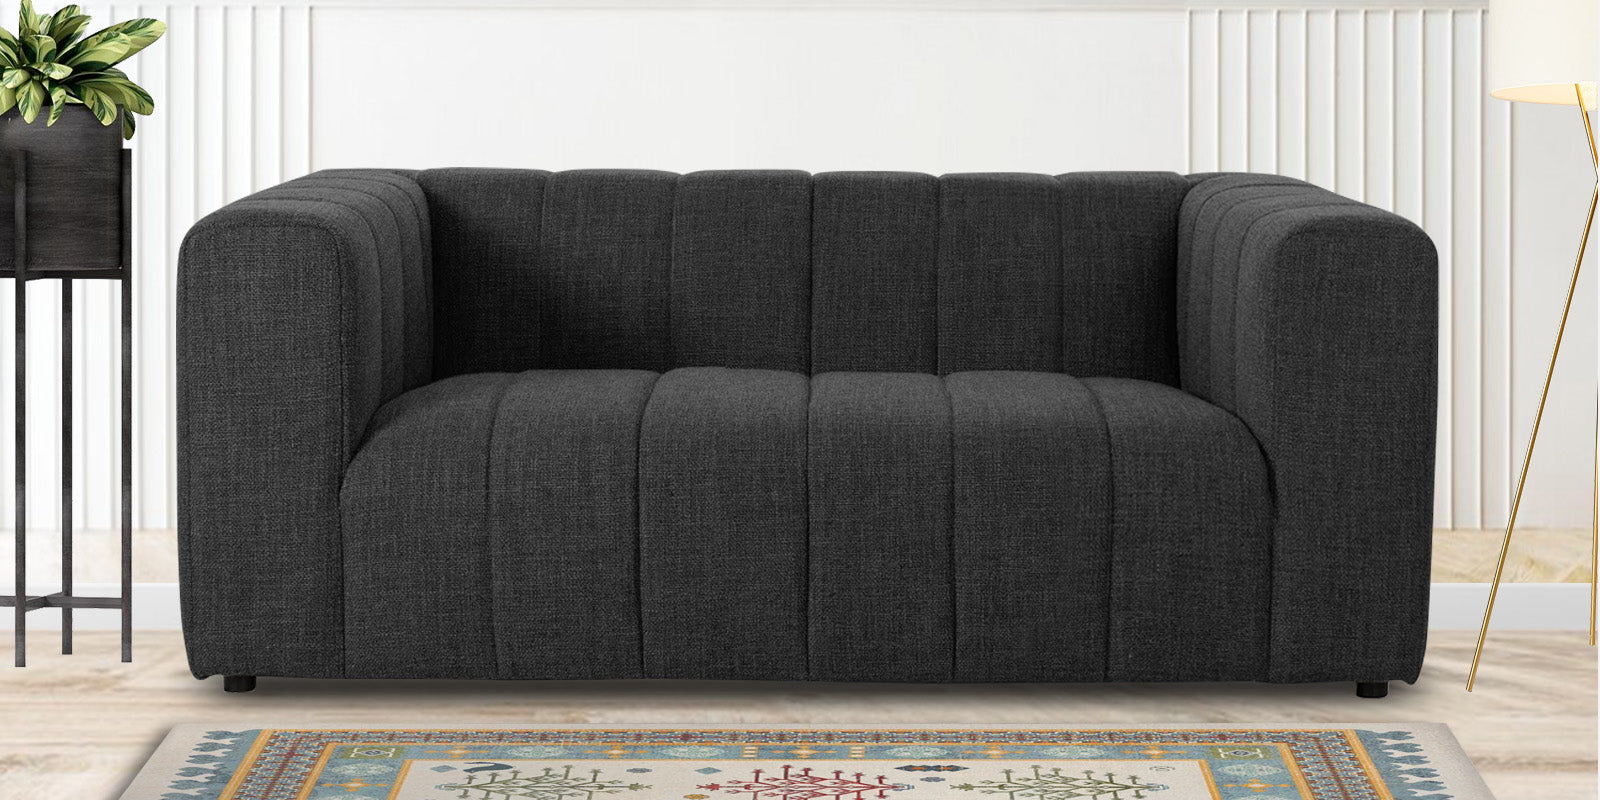 Lara Fabric 2 Seater Sofa in Charcoal Grey Colour